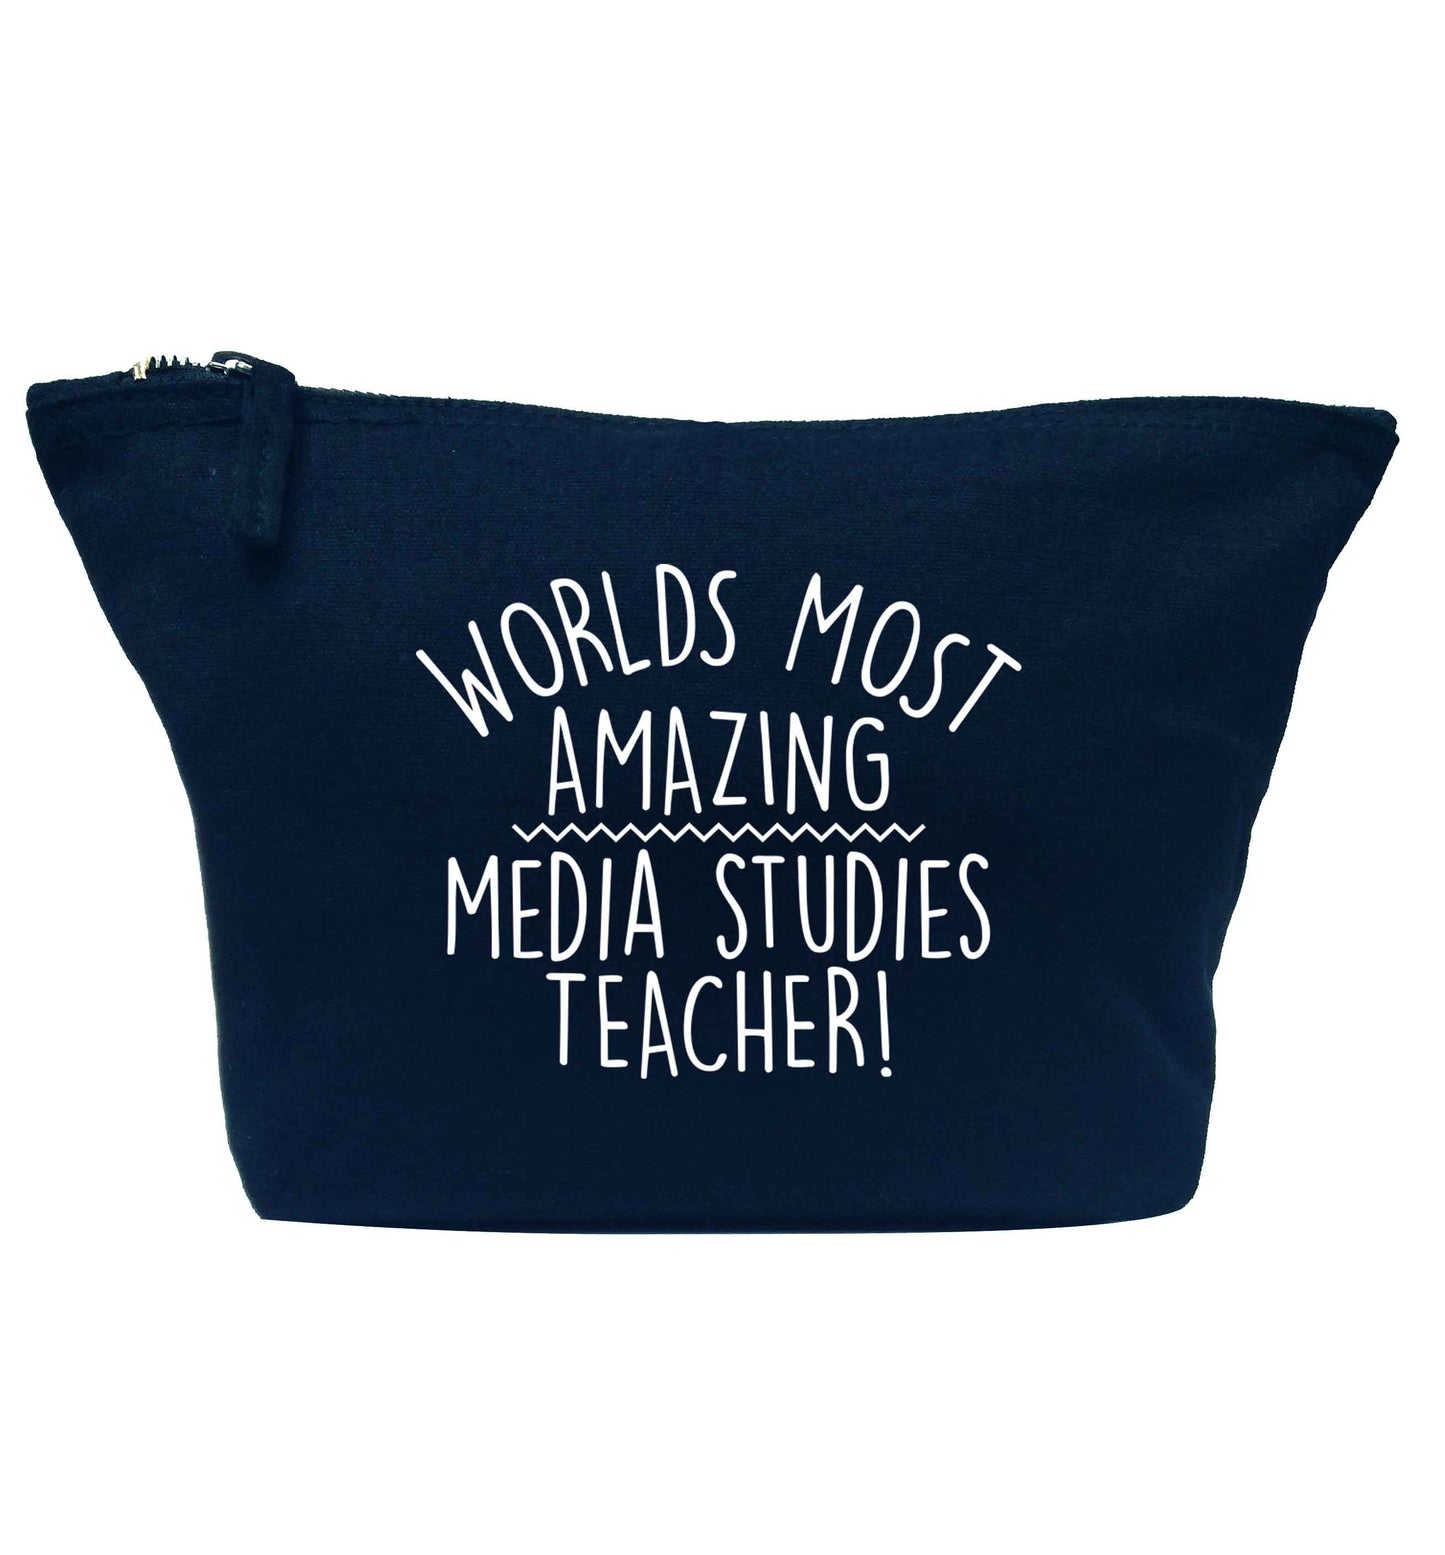 Worlds most amazing media studies teacher navy makeup bag